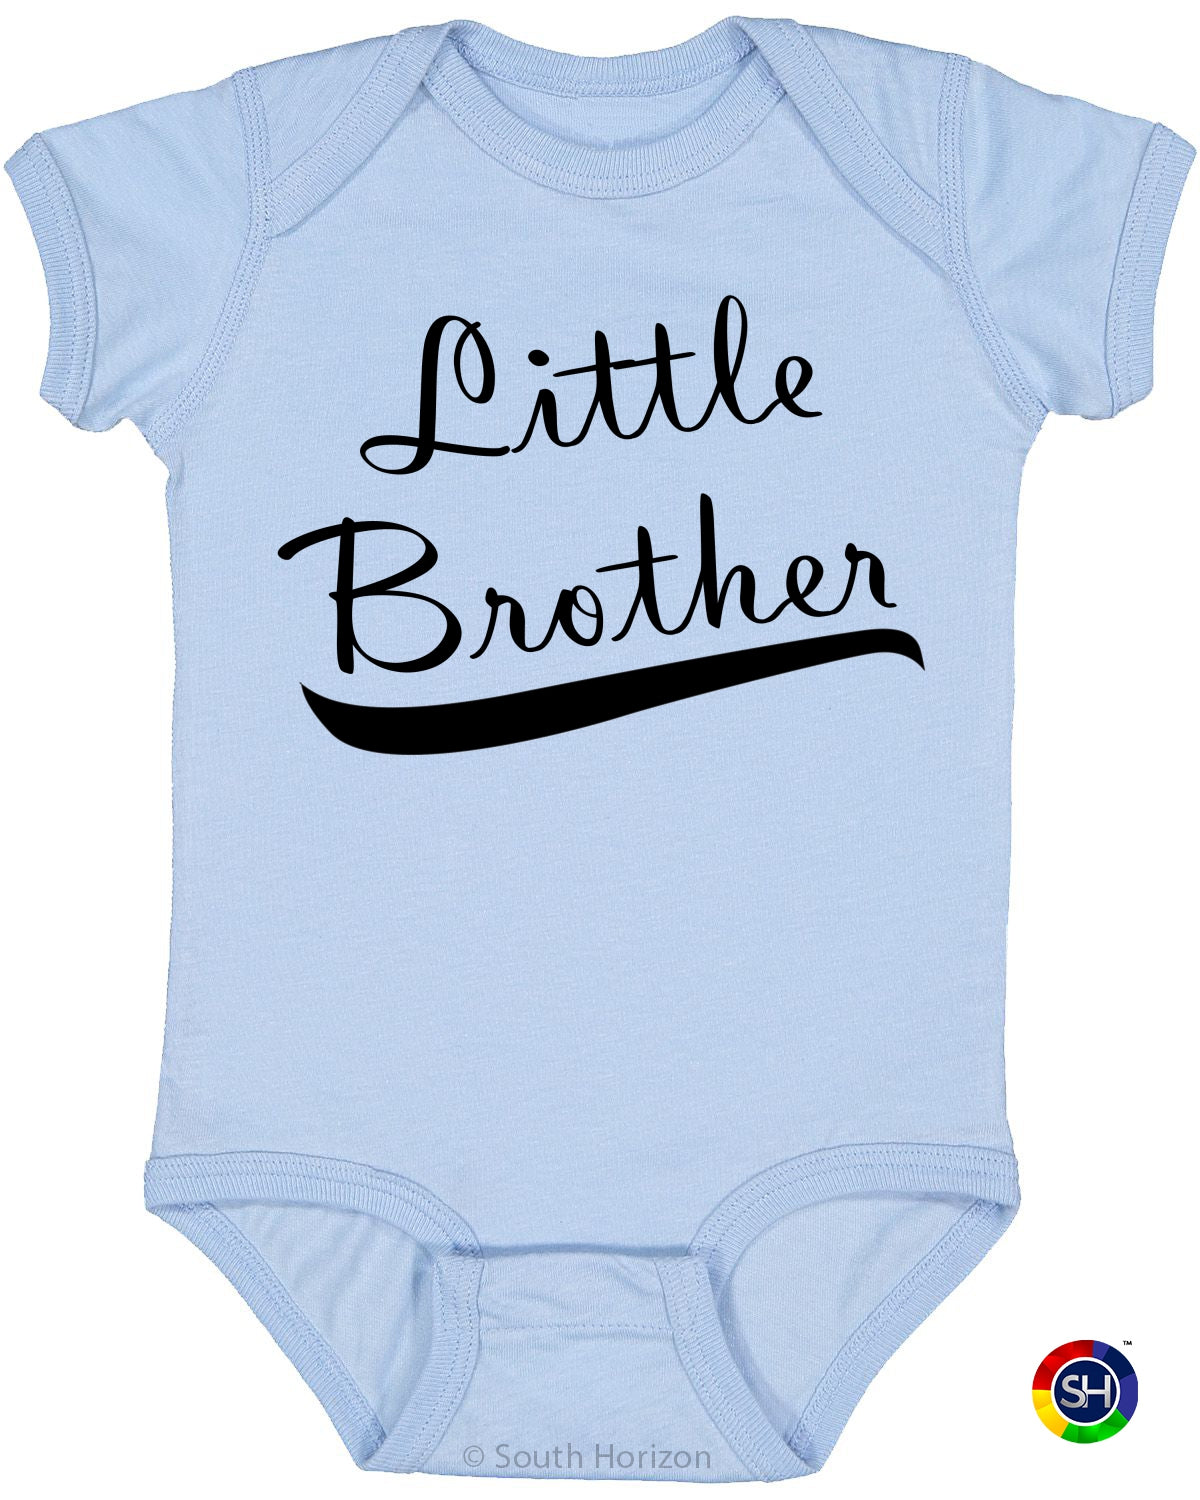 Little Brother Infant BodySuit